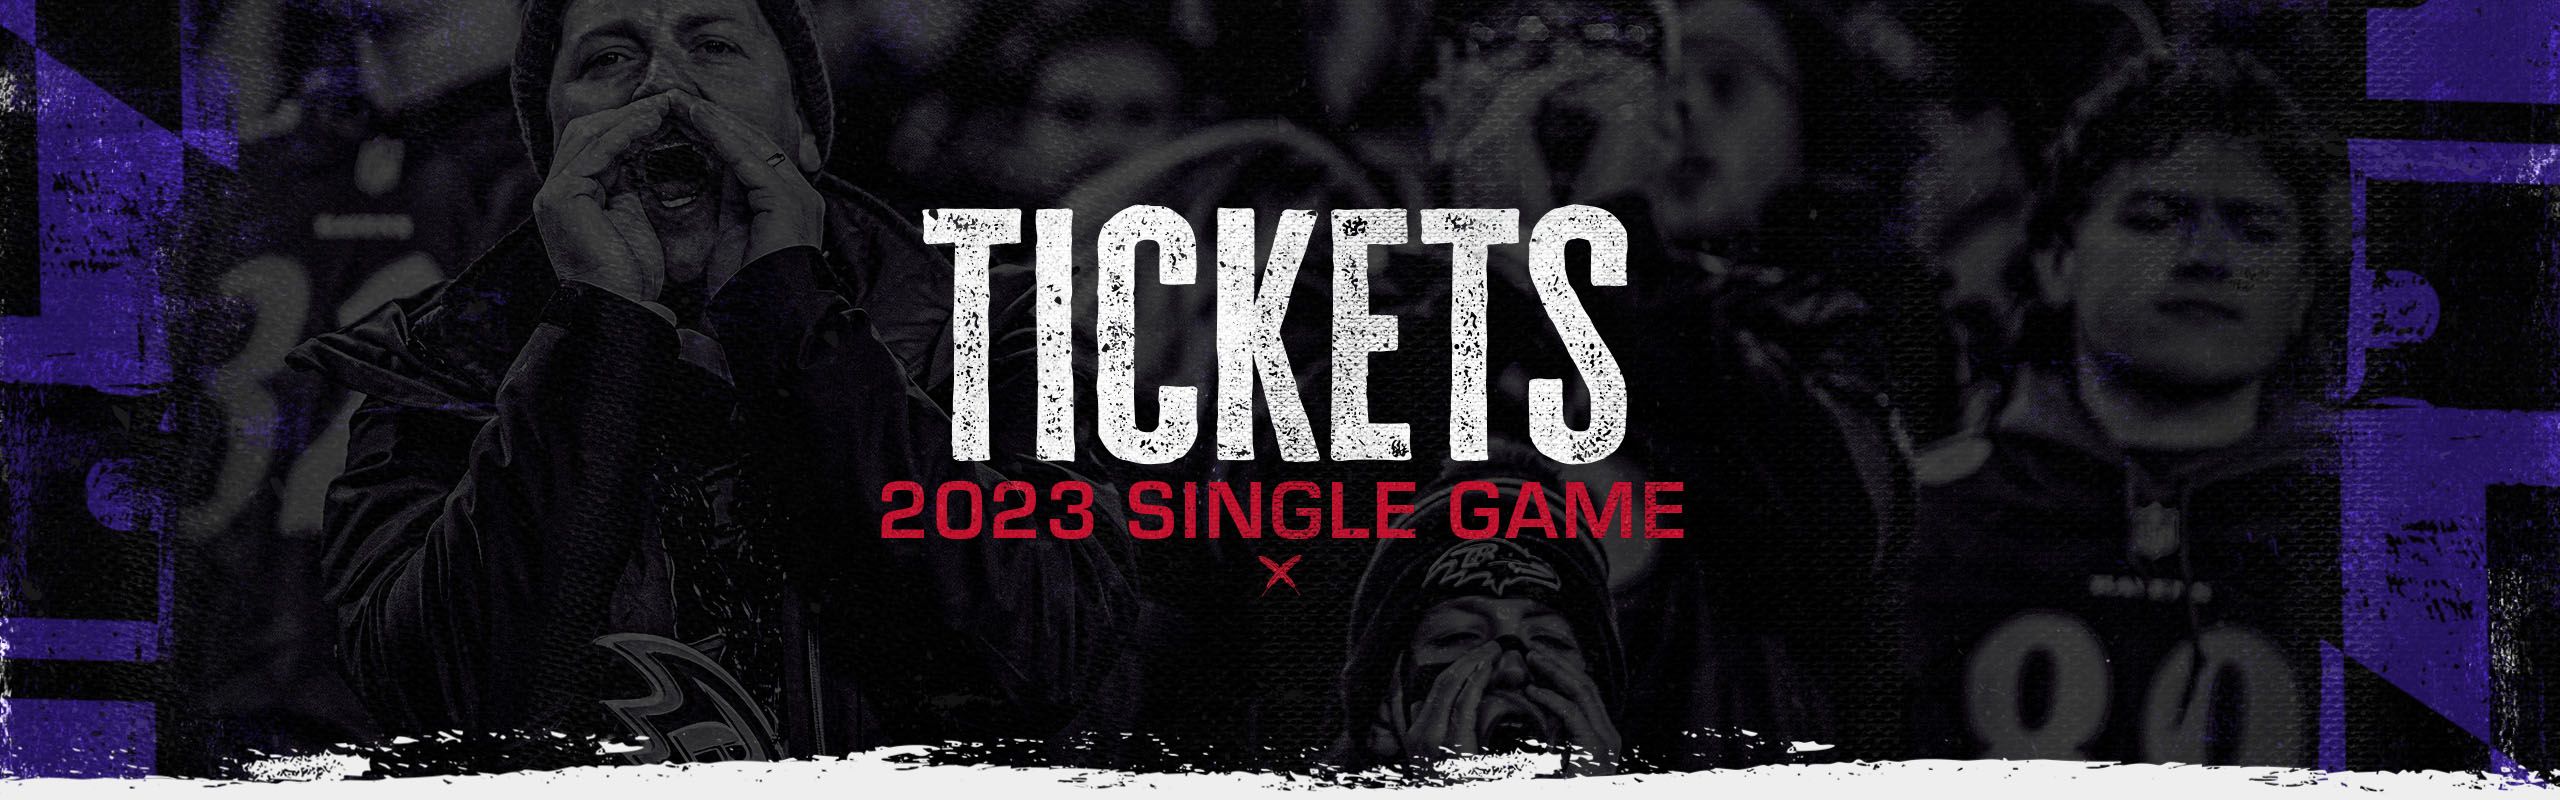 raiders single game tickets 2022